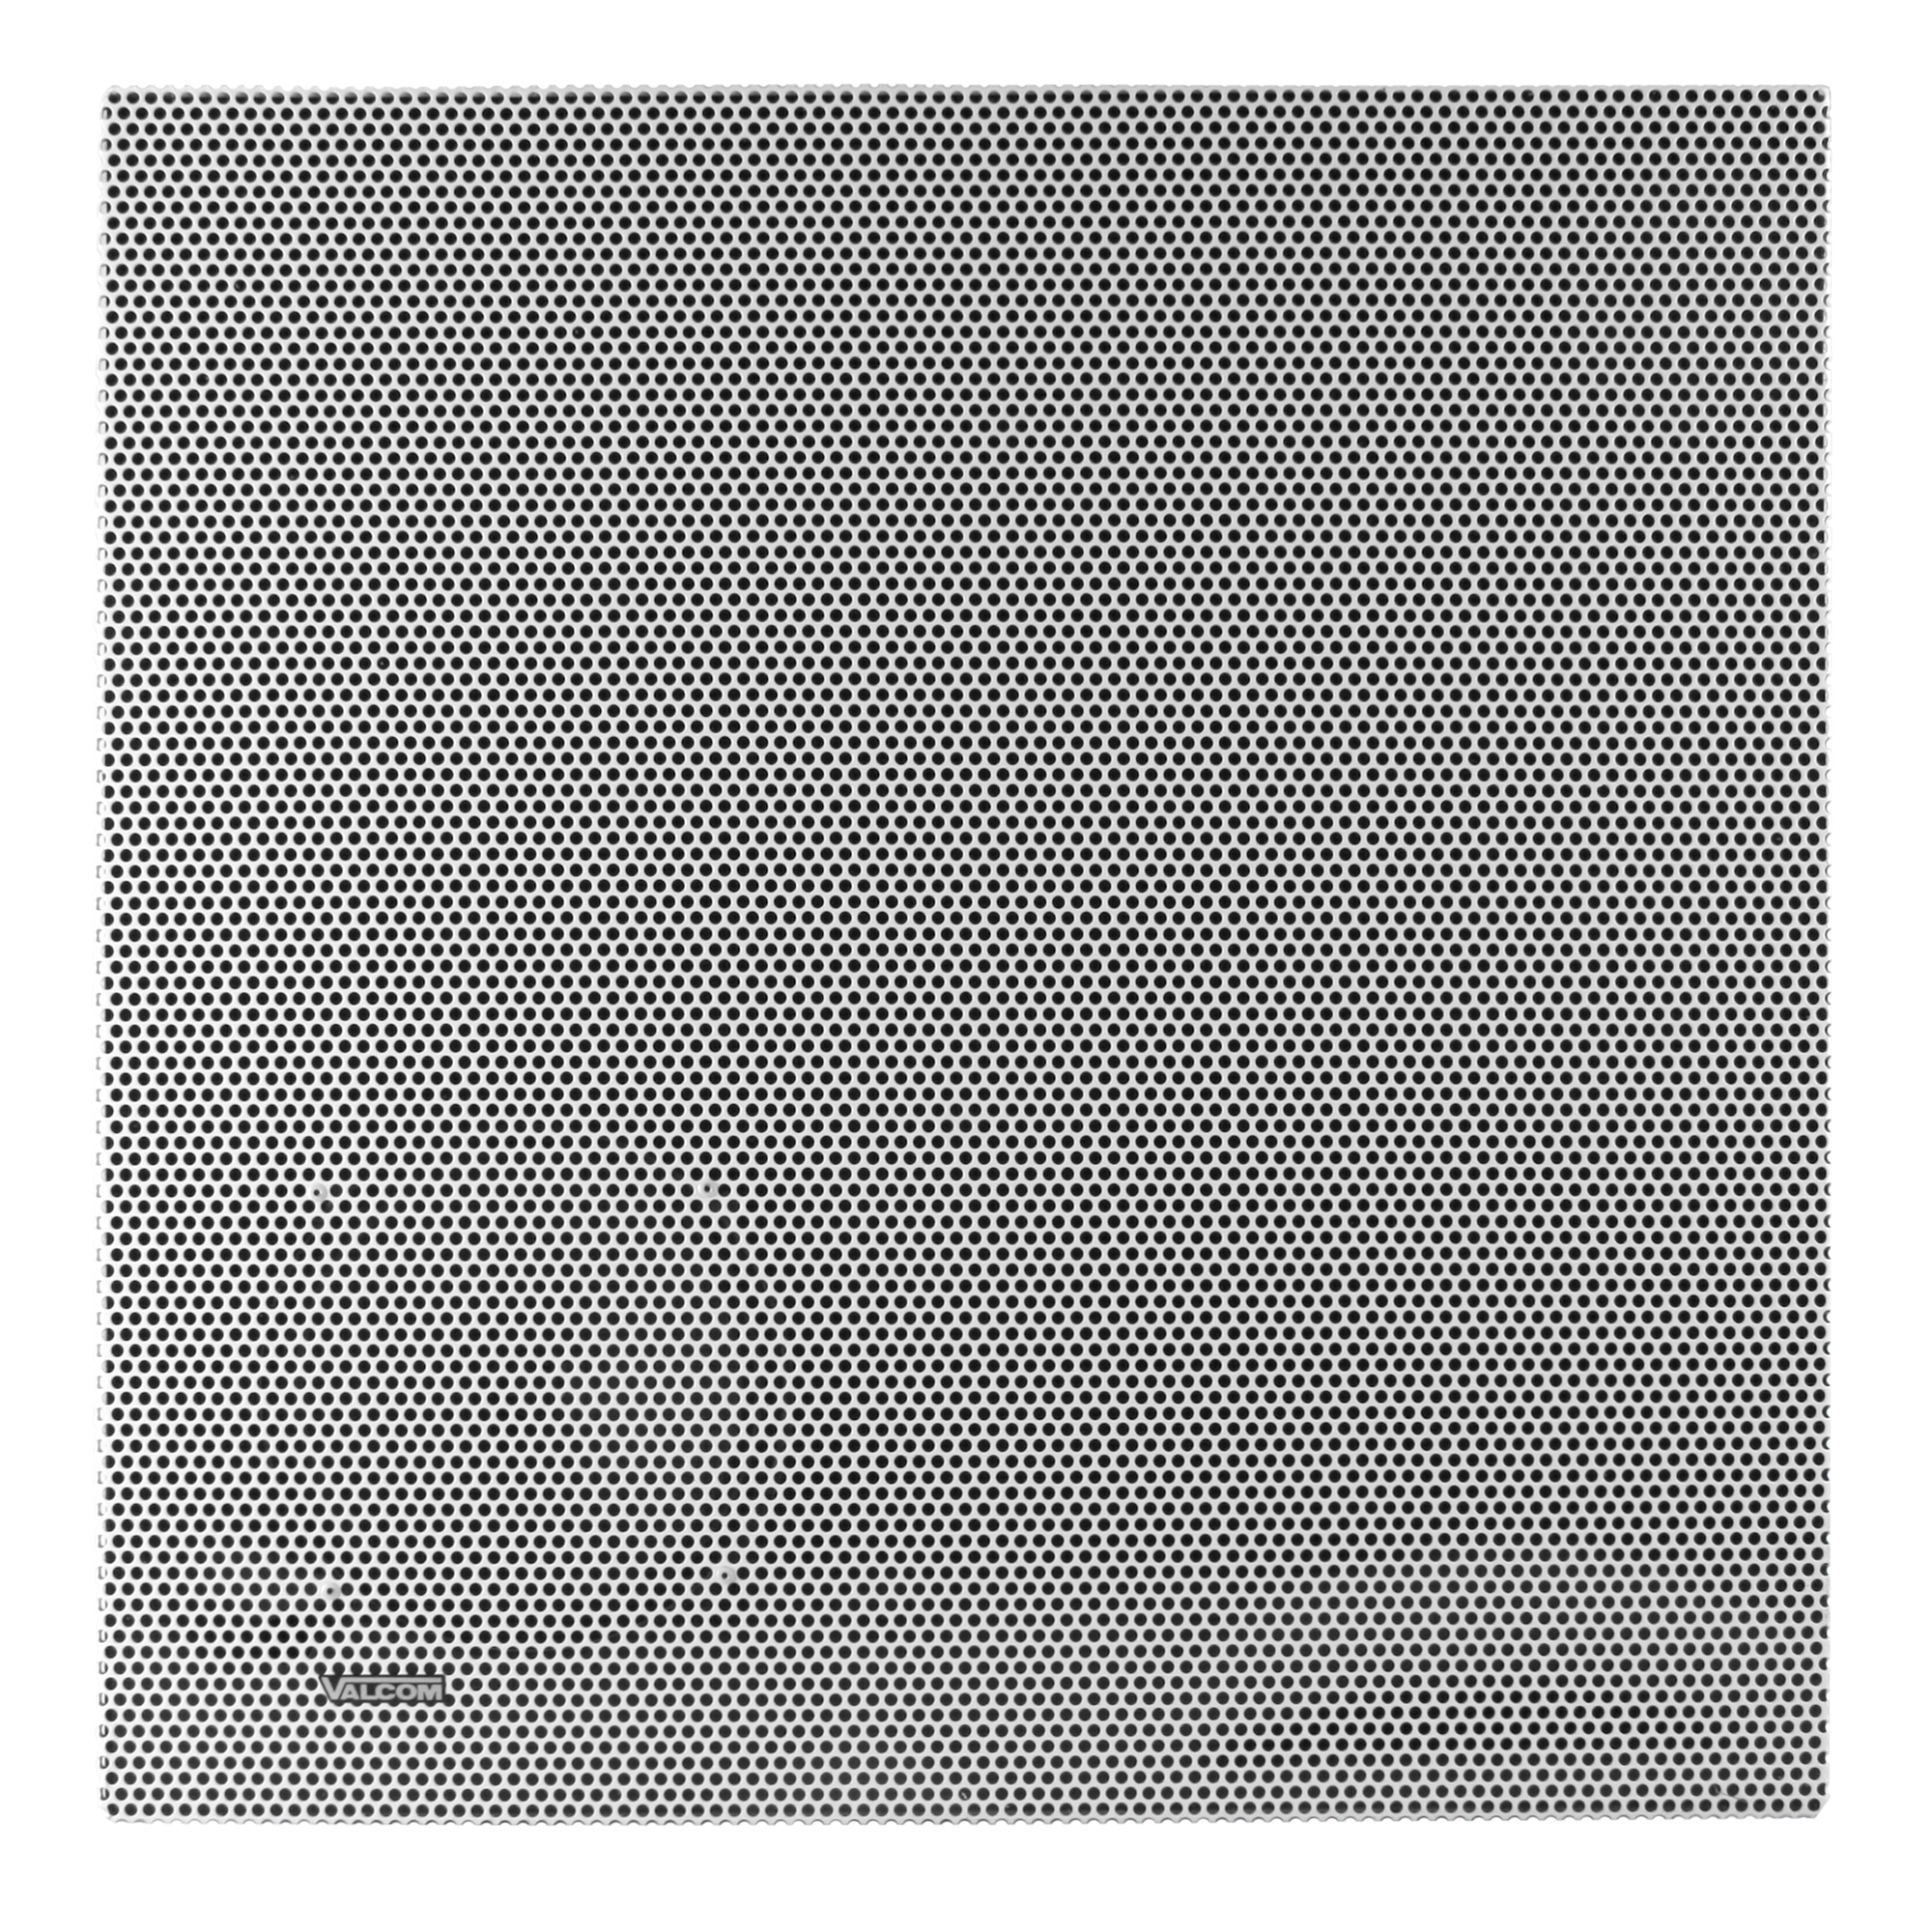 V-9062 Lay-In 2' x 2' Ceiling Speaker with Backbox, Talkback, White